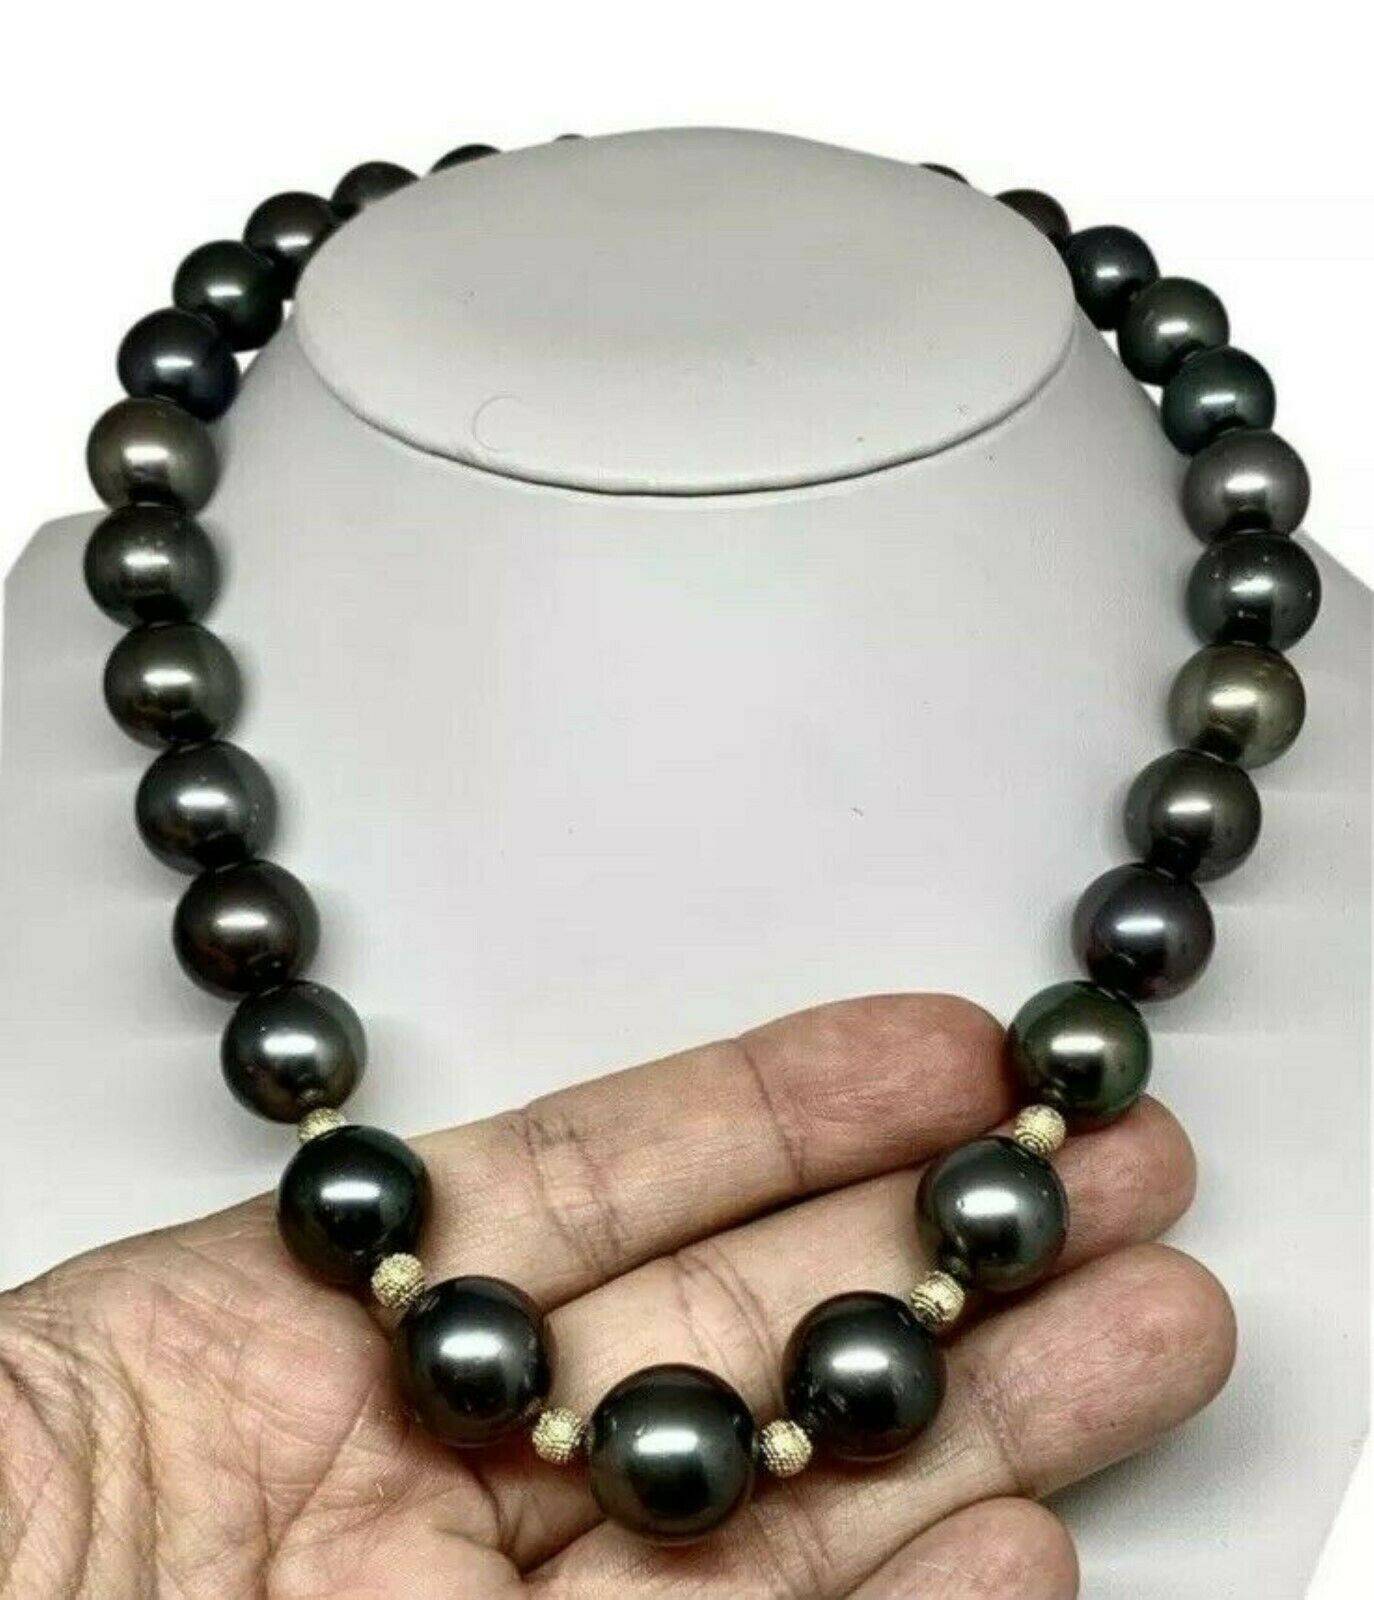 Diamond Tahitian Pearl Necklace 14k Gold 16.7 mm 19.5" Certified $19,470 915543 - Certified Estate Jewelry